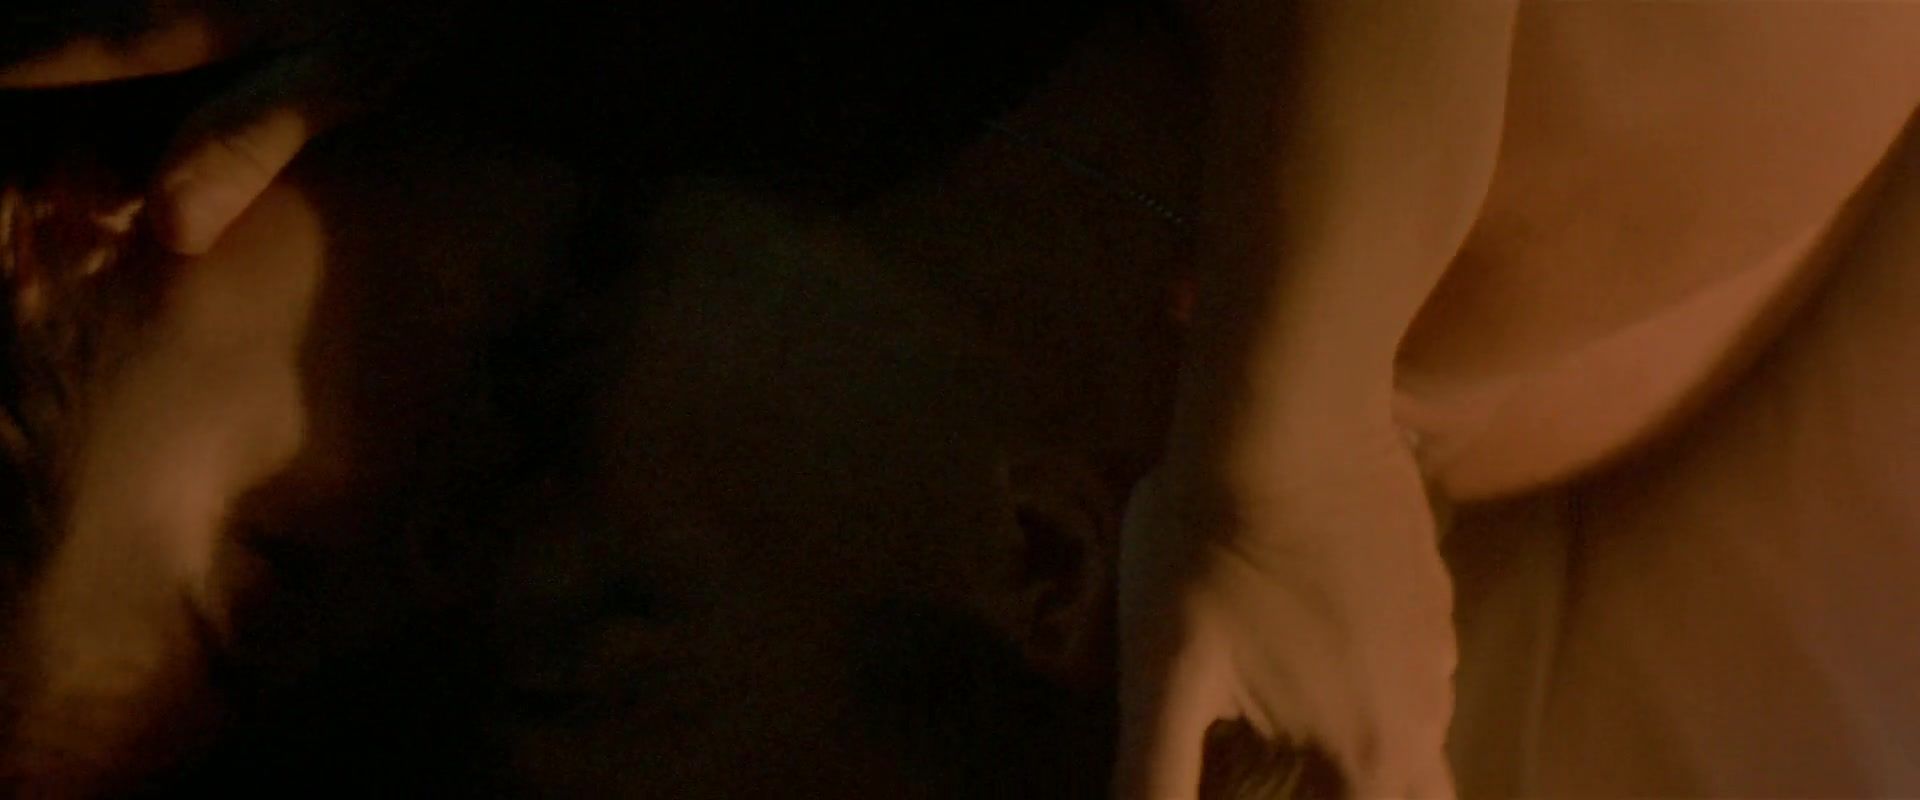 Milf Hot Scene with actress Madeleine Stowe | The movie "Revenge" Masturbate